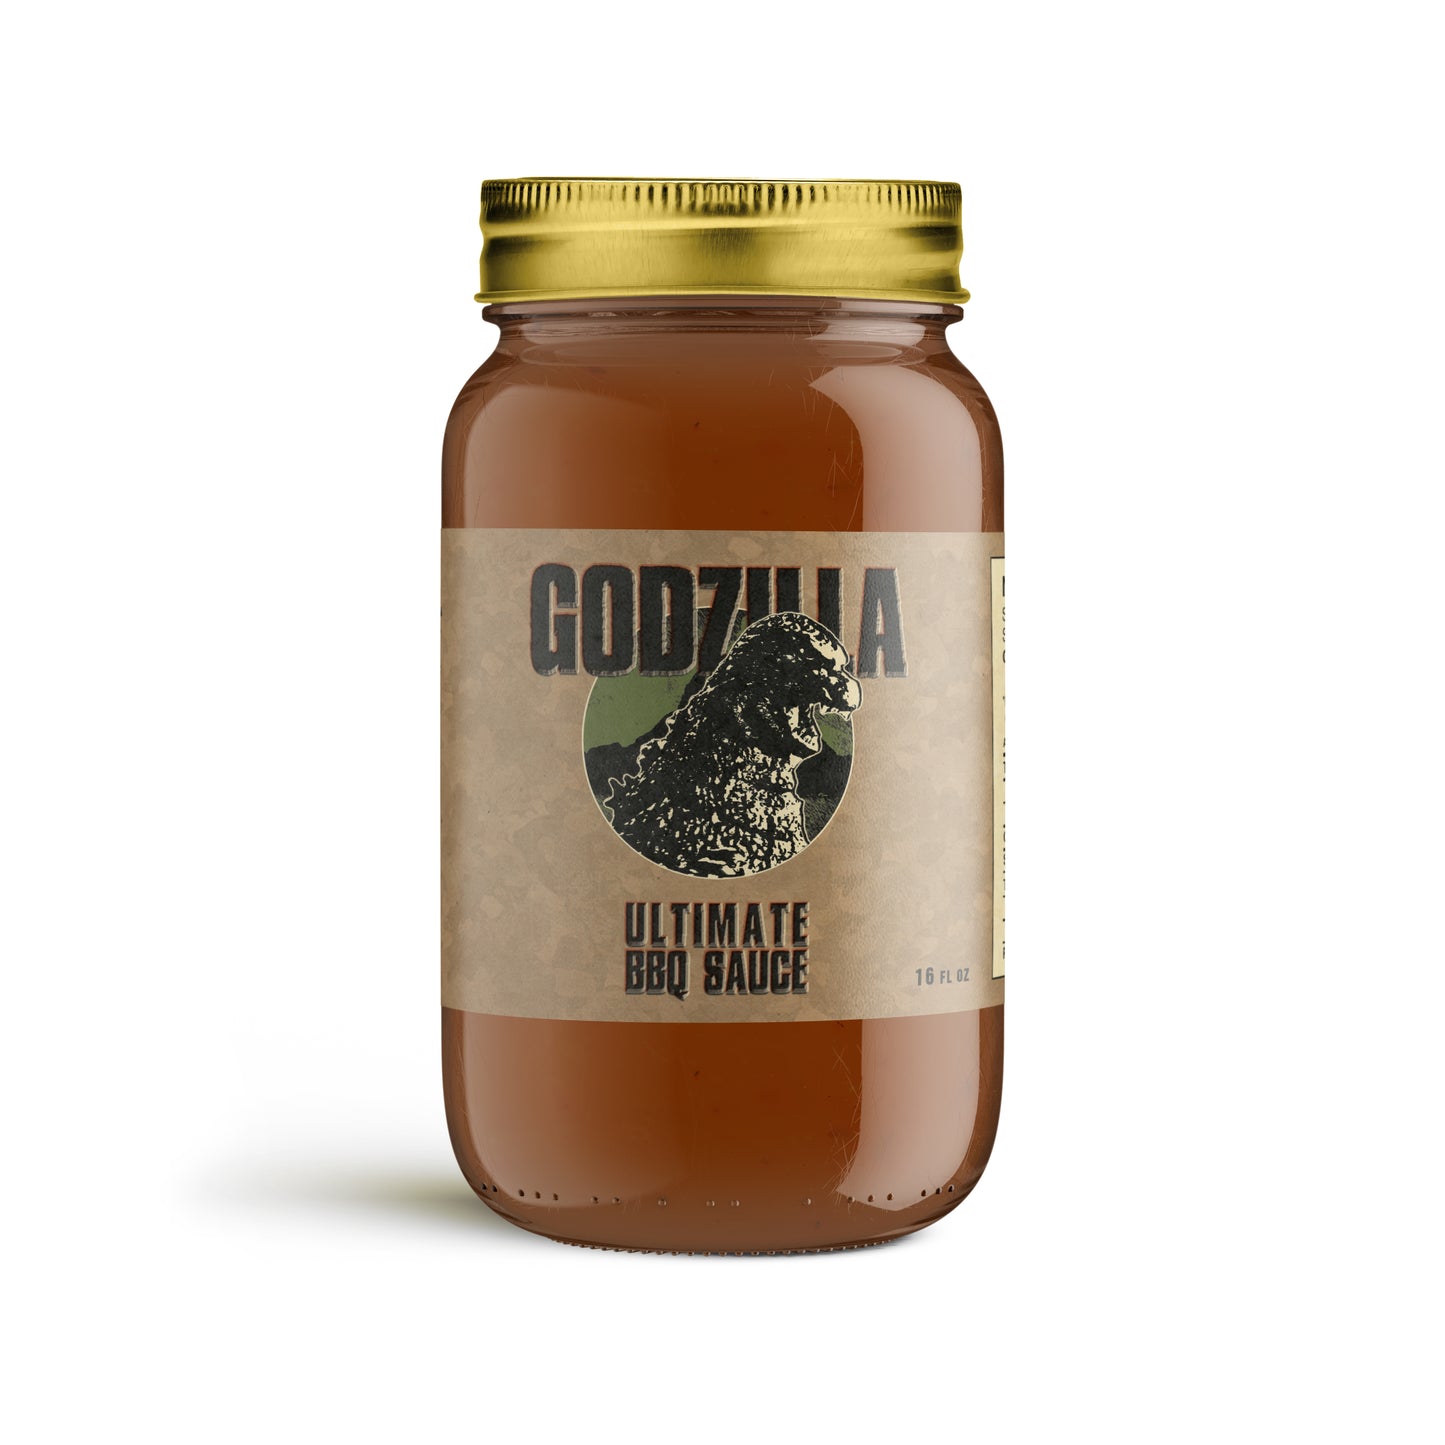 Godzilla's Ultimate BBQ Sauce